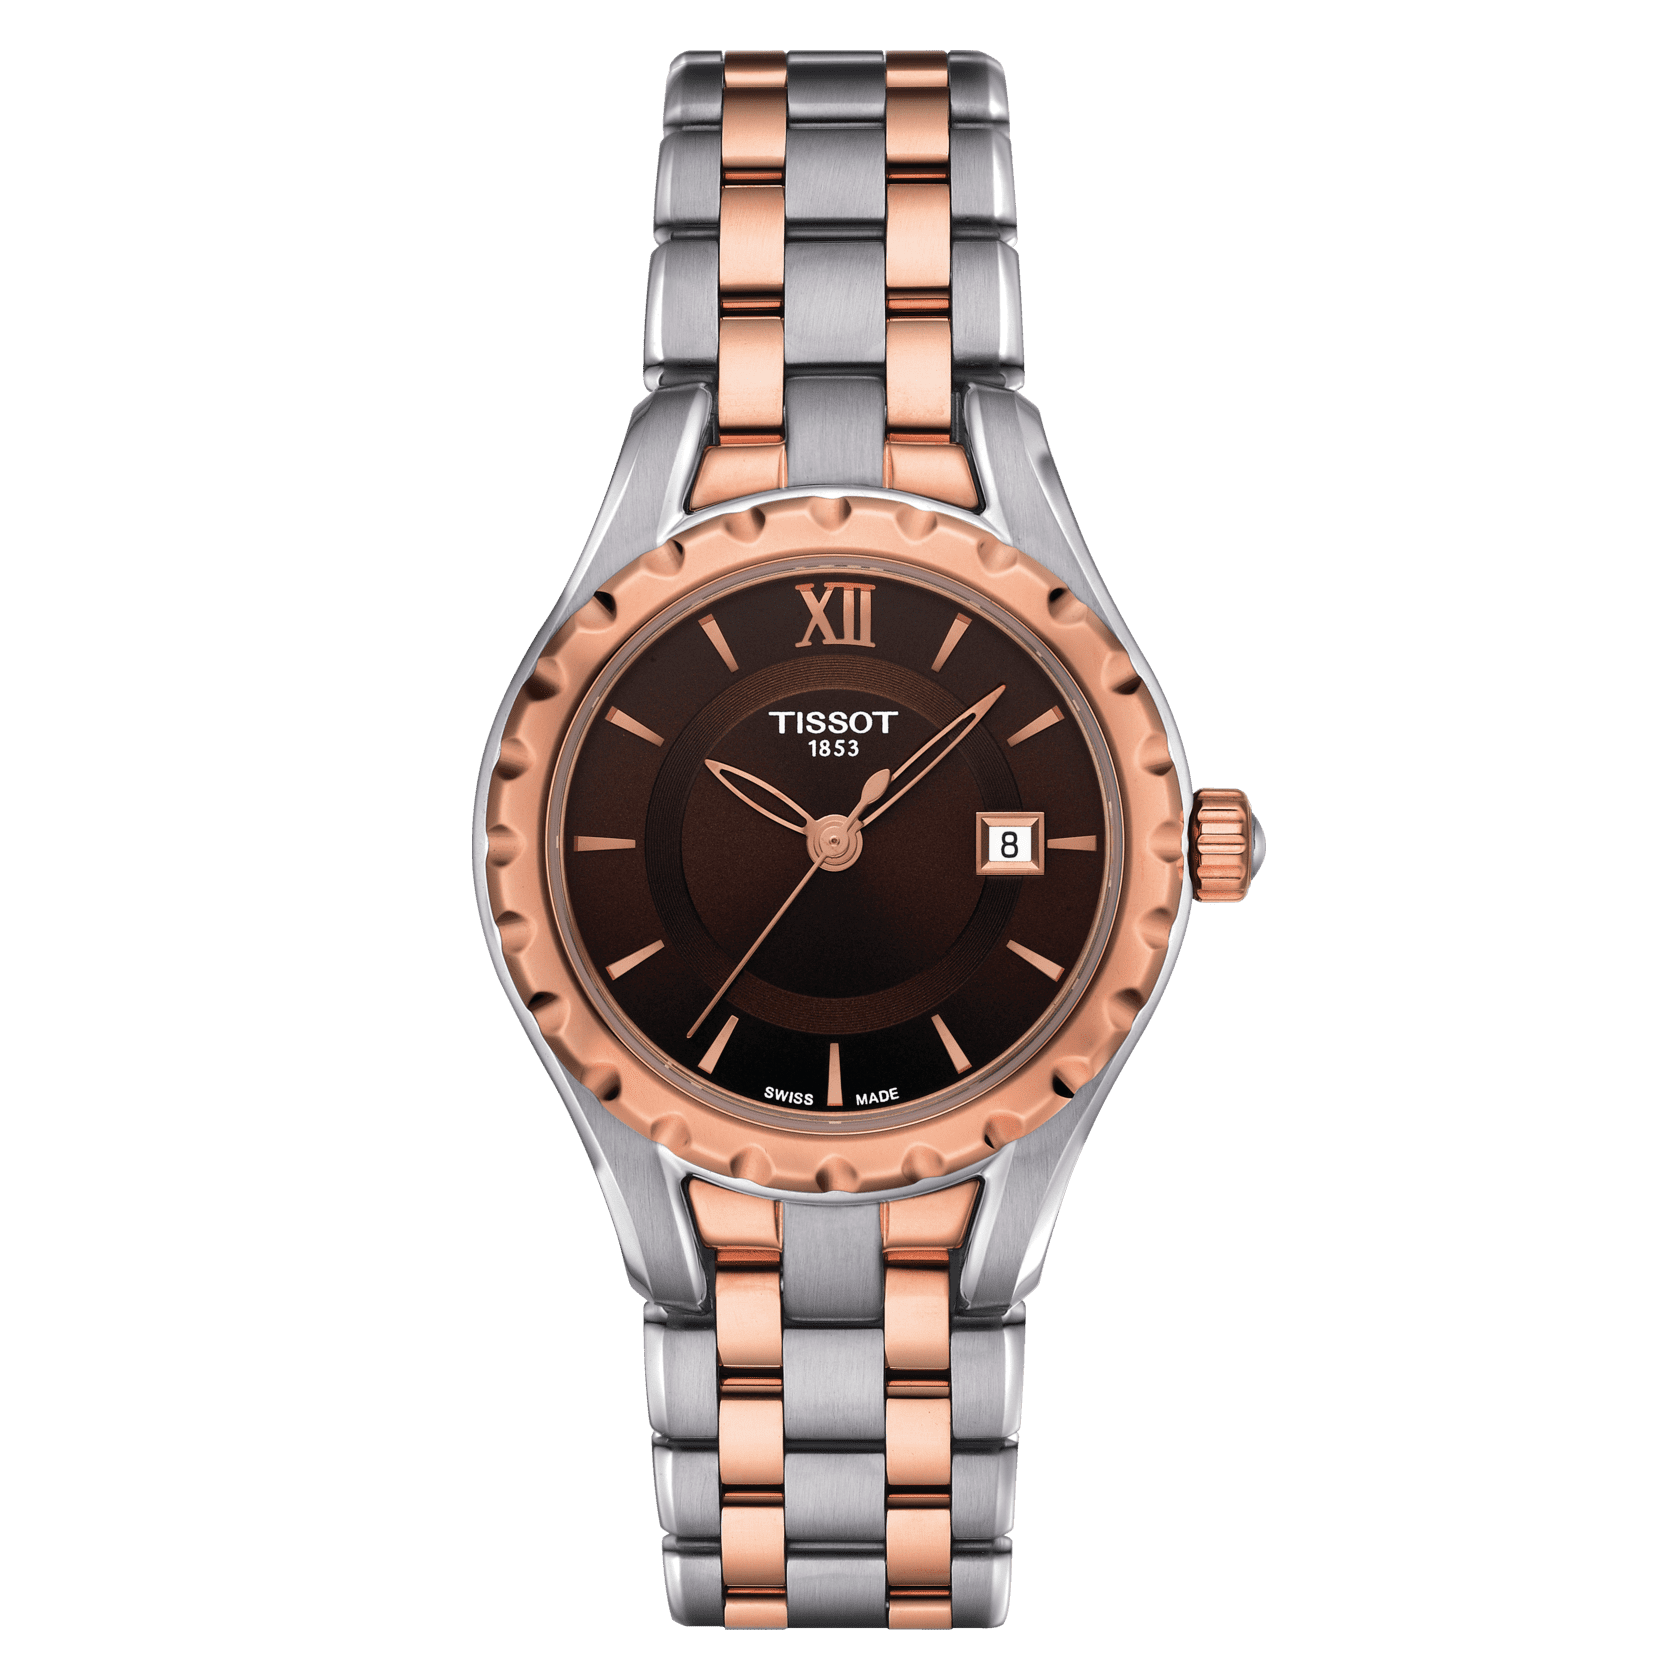 Luxury Replica Watches Scholarship